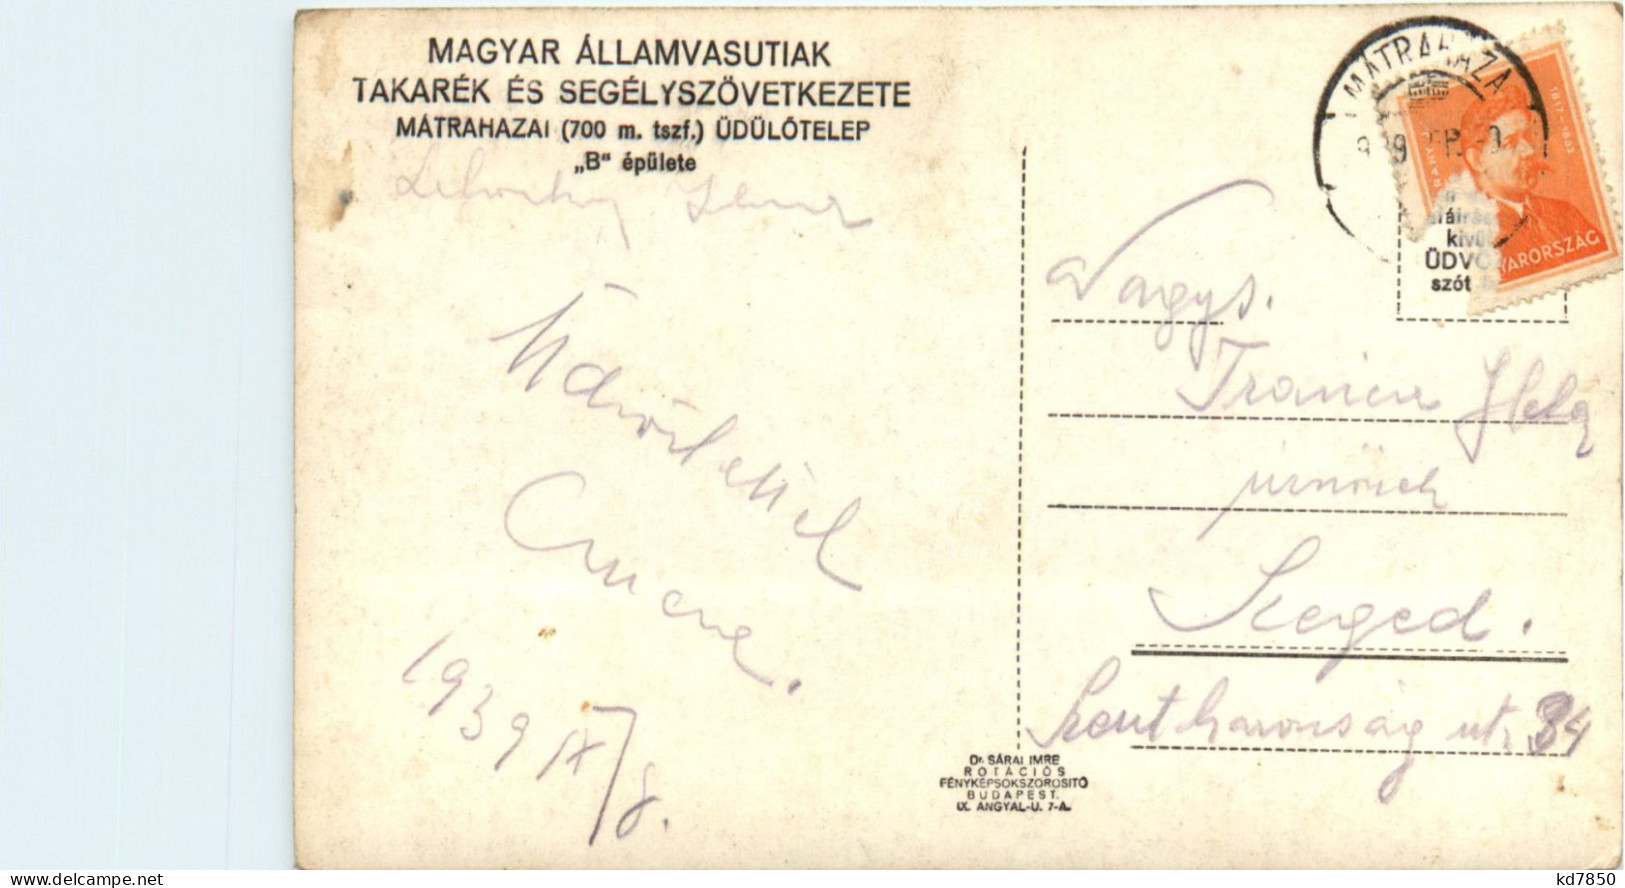 Magyar Allamvasutiak - Hungary